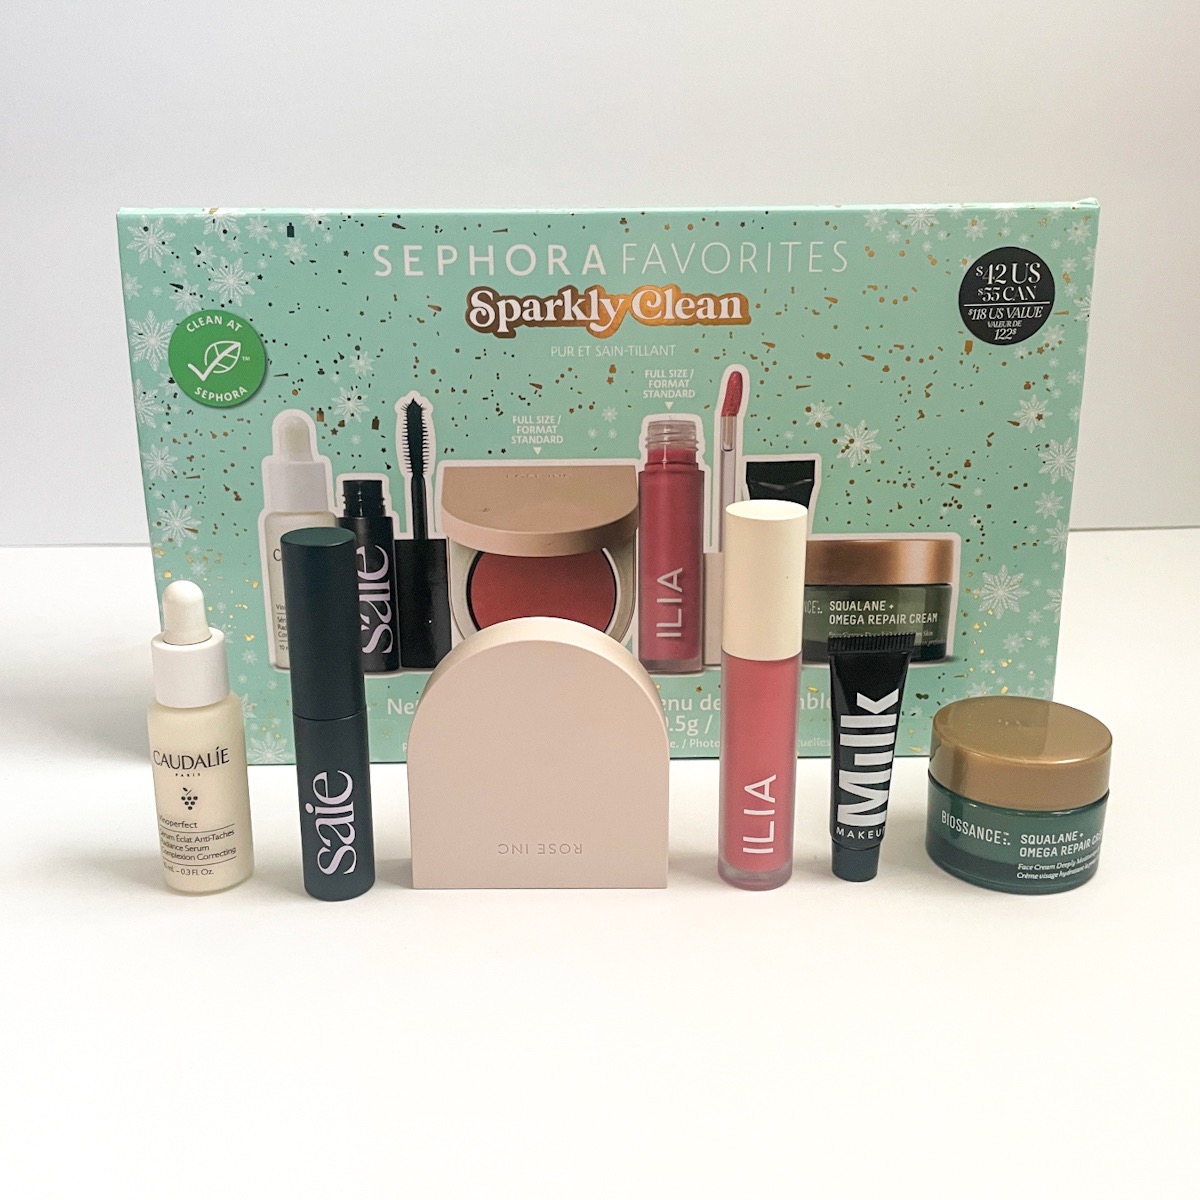 Sephora Favorites: Sparkly Clean Makeup Set Review